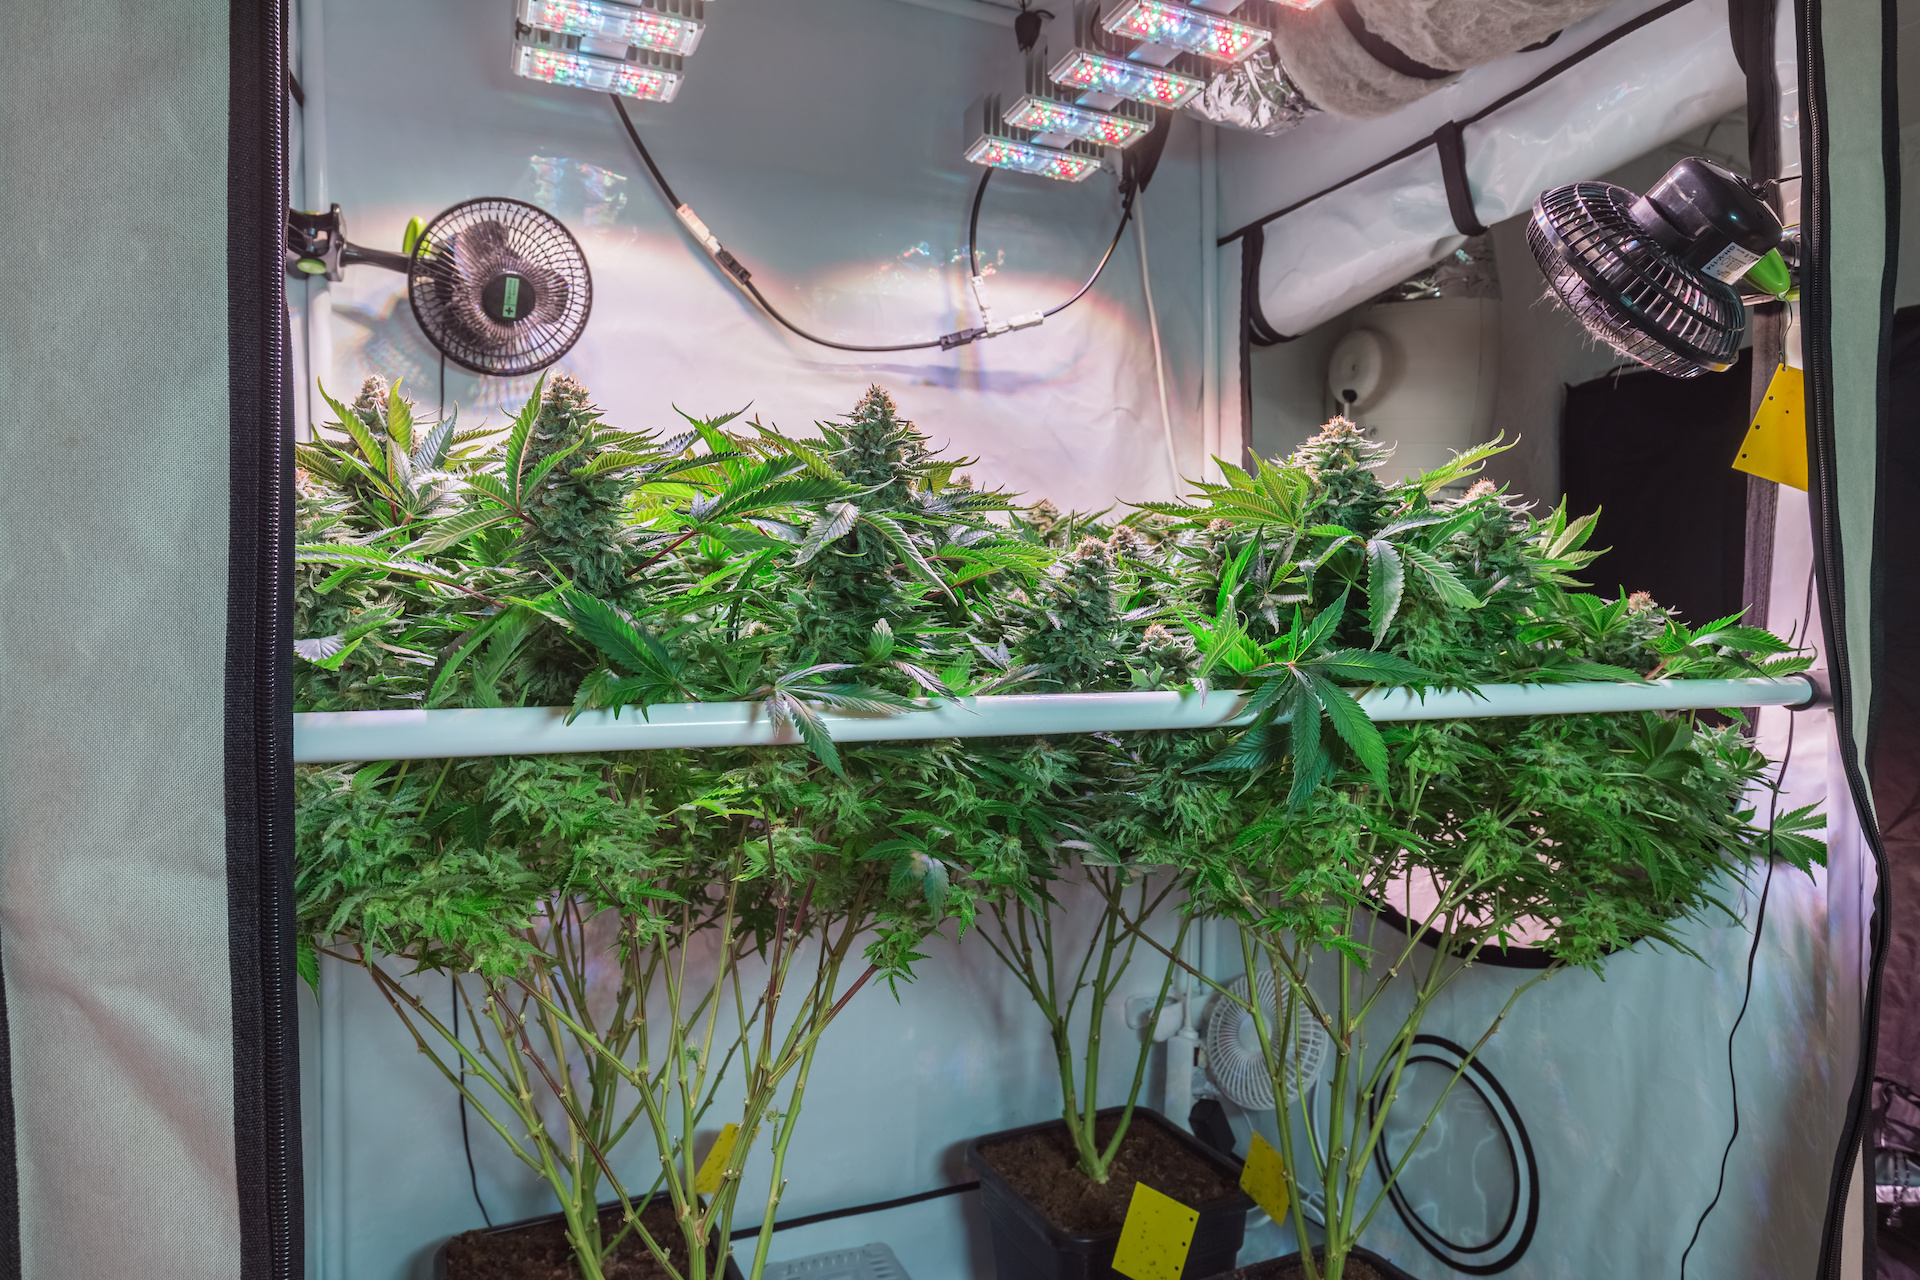 How to build a indoor grow room